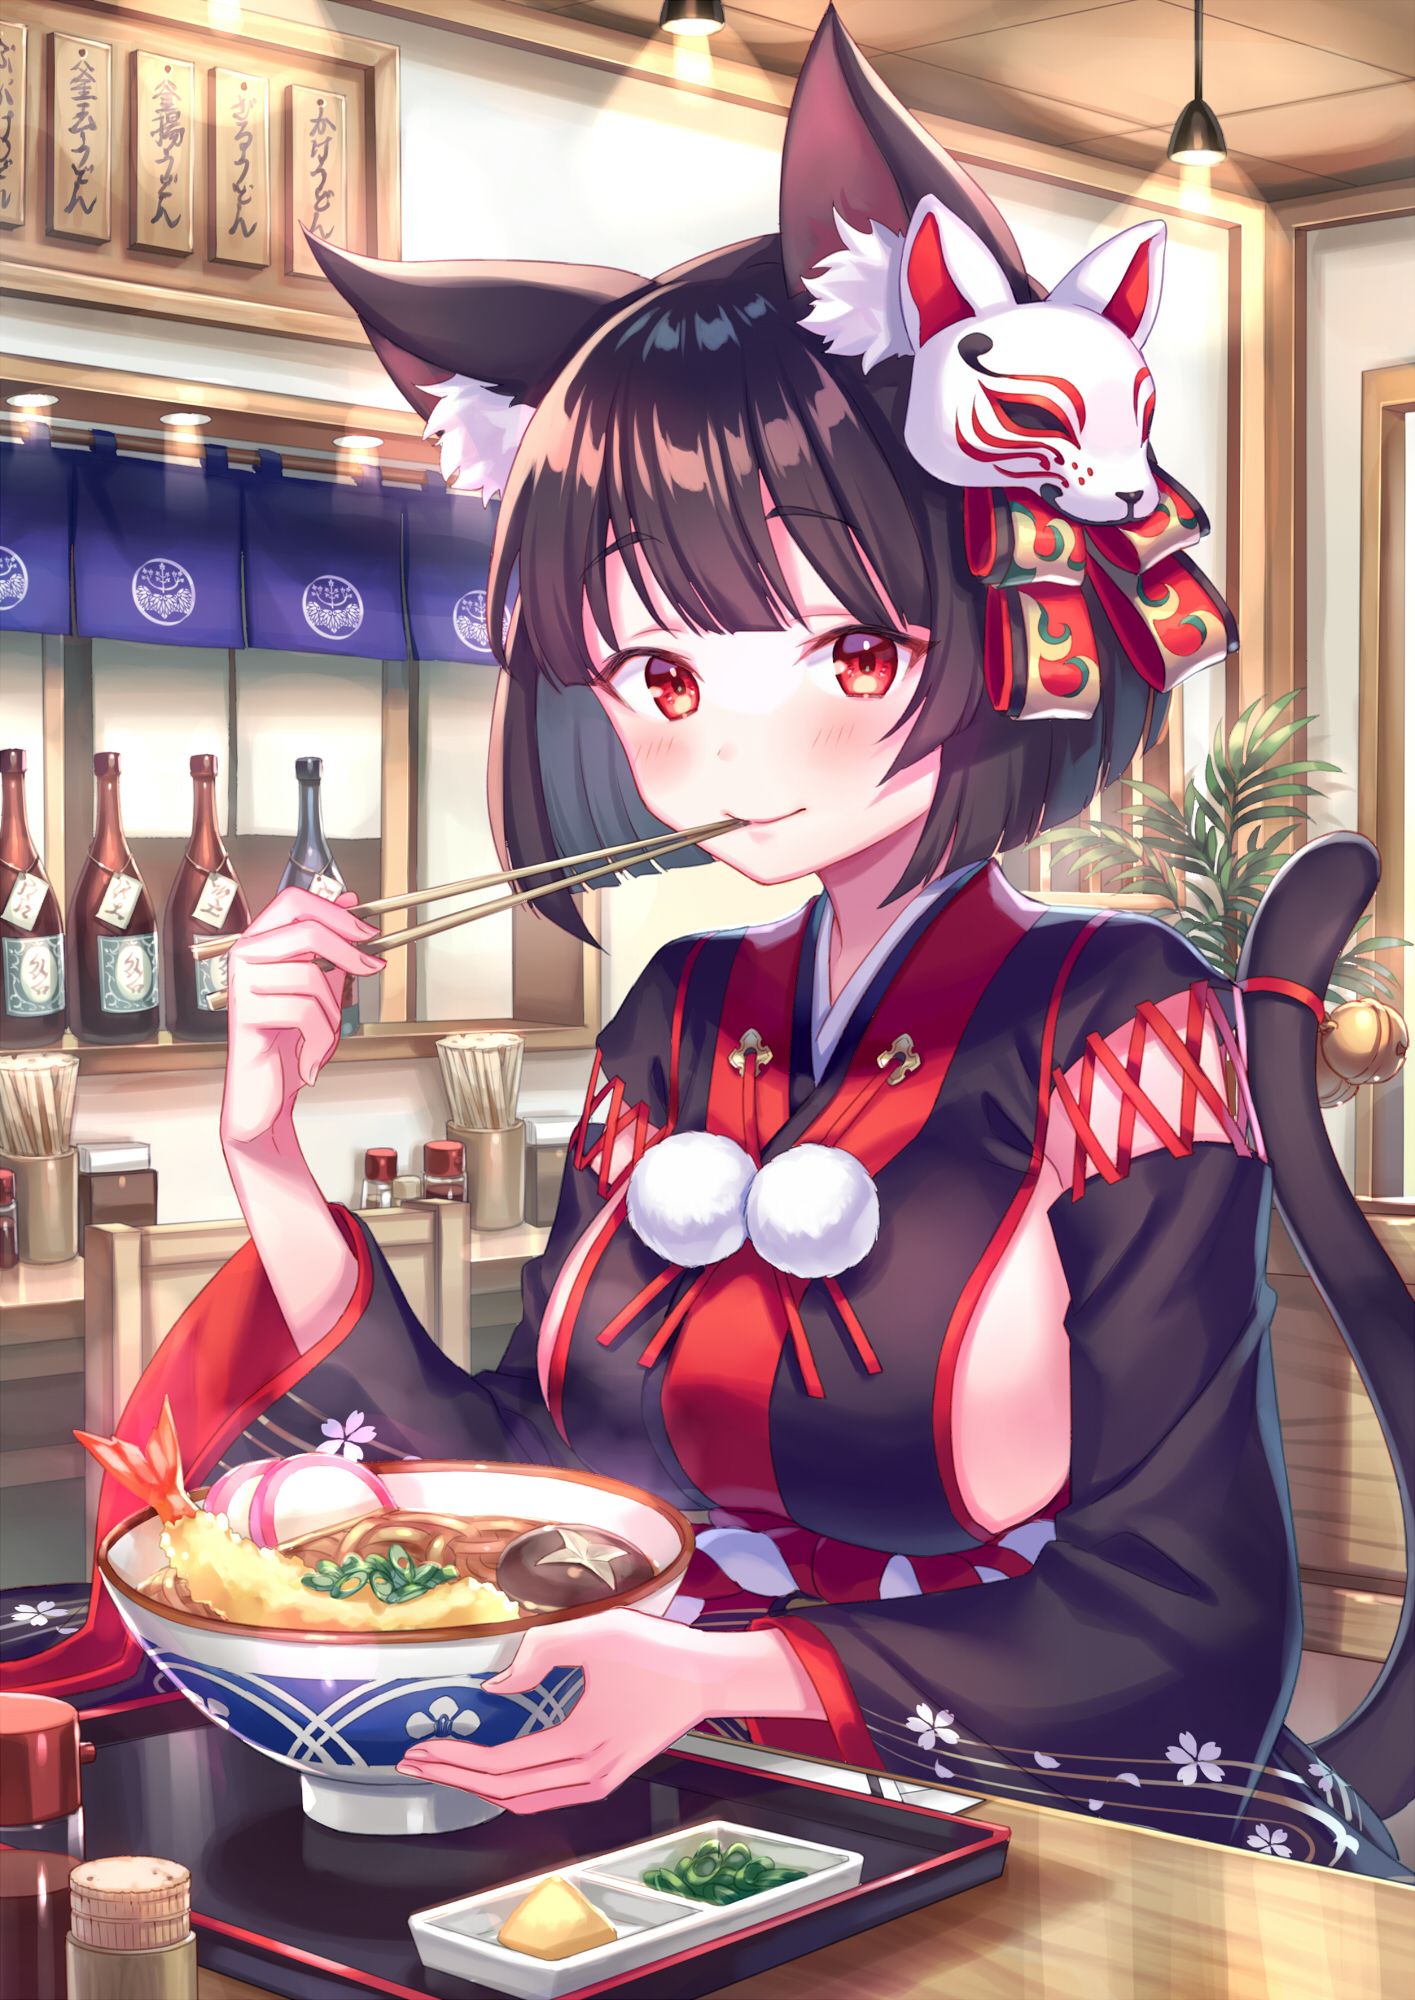 Pretty neko girl Yamashiro eats ramen with Chopsticks: Azur Lane (Artist: Zoff (Daria))